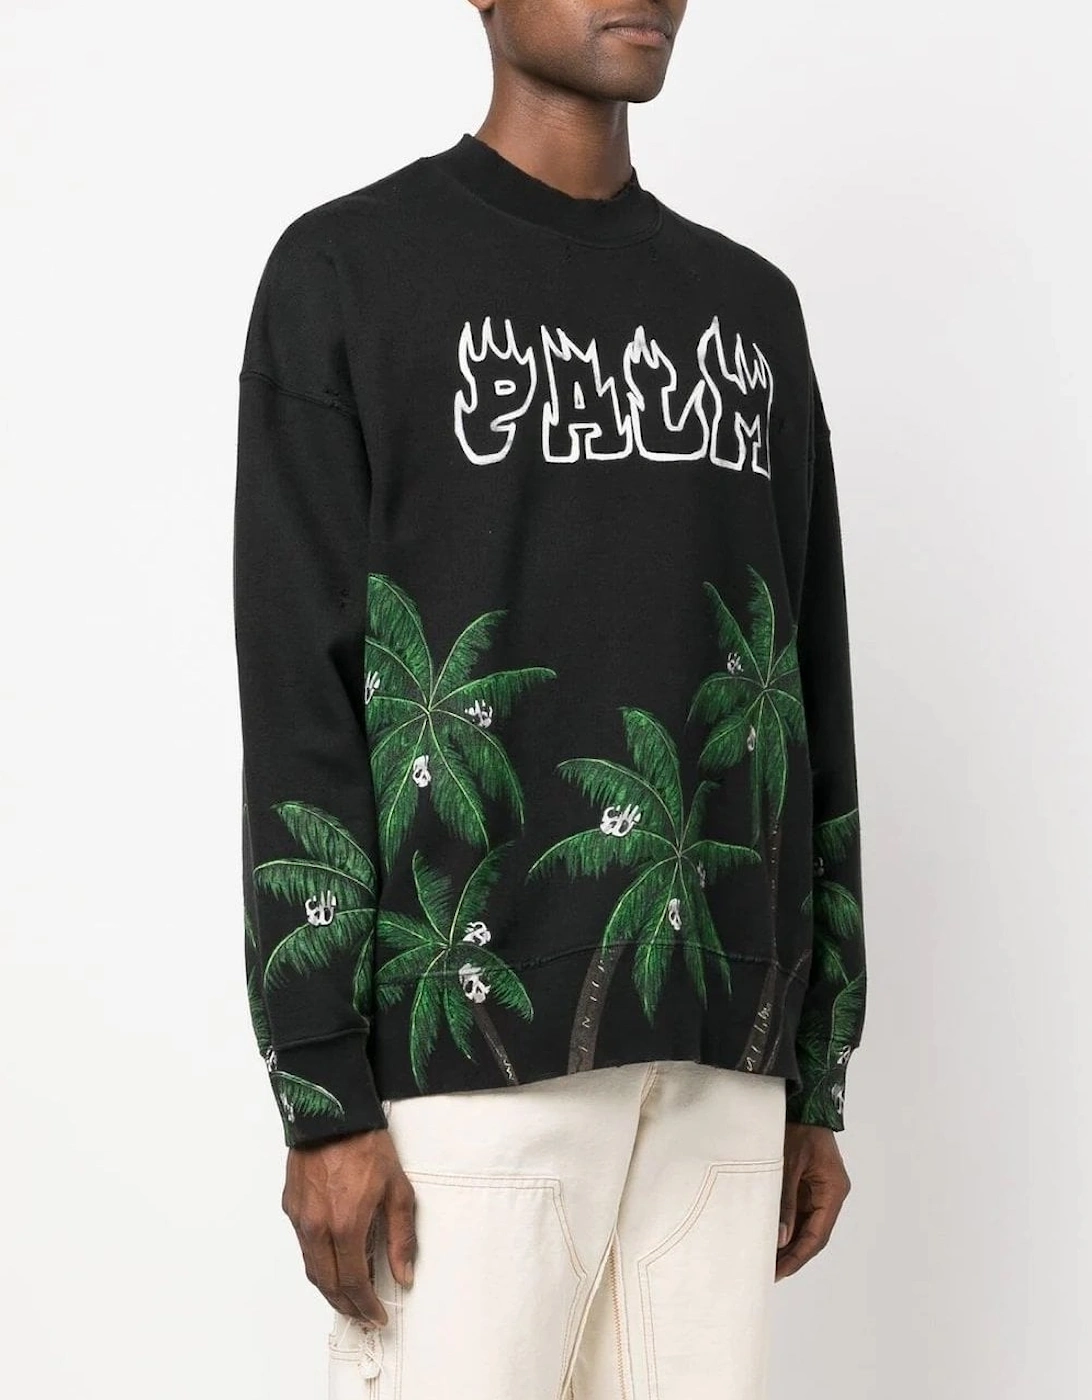 Palms & Skull Crew Sweatshirt Black